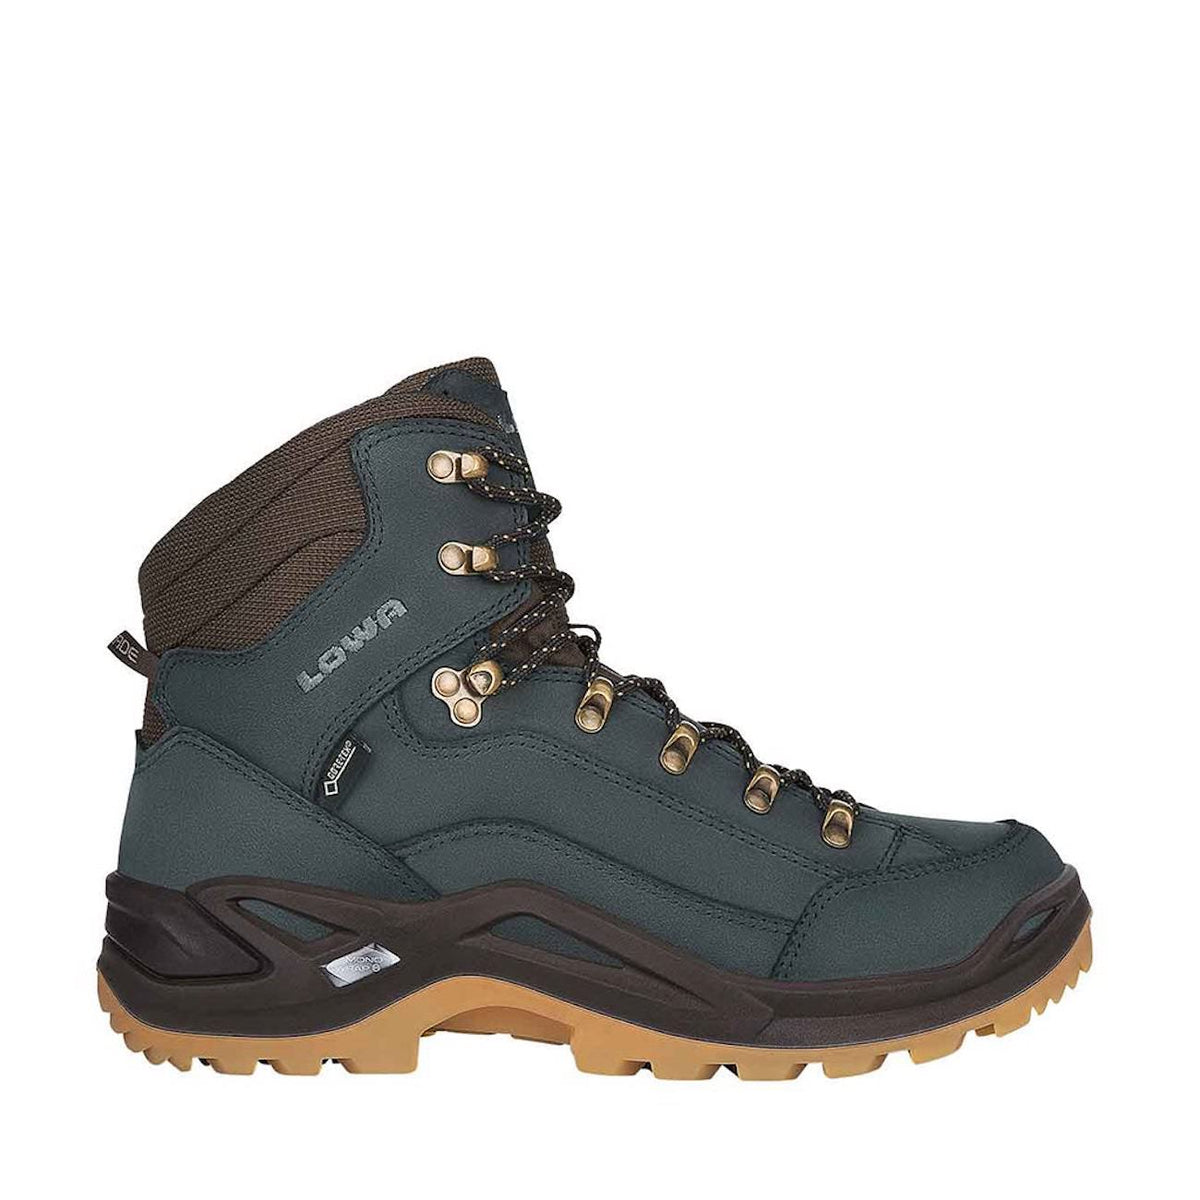 LOWA, Renegade GTX Mid, Men’s, Navy/Honey Hiking Boots LOWA 